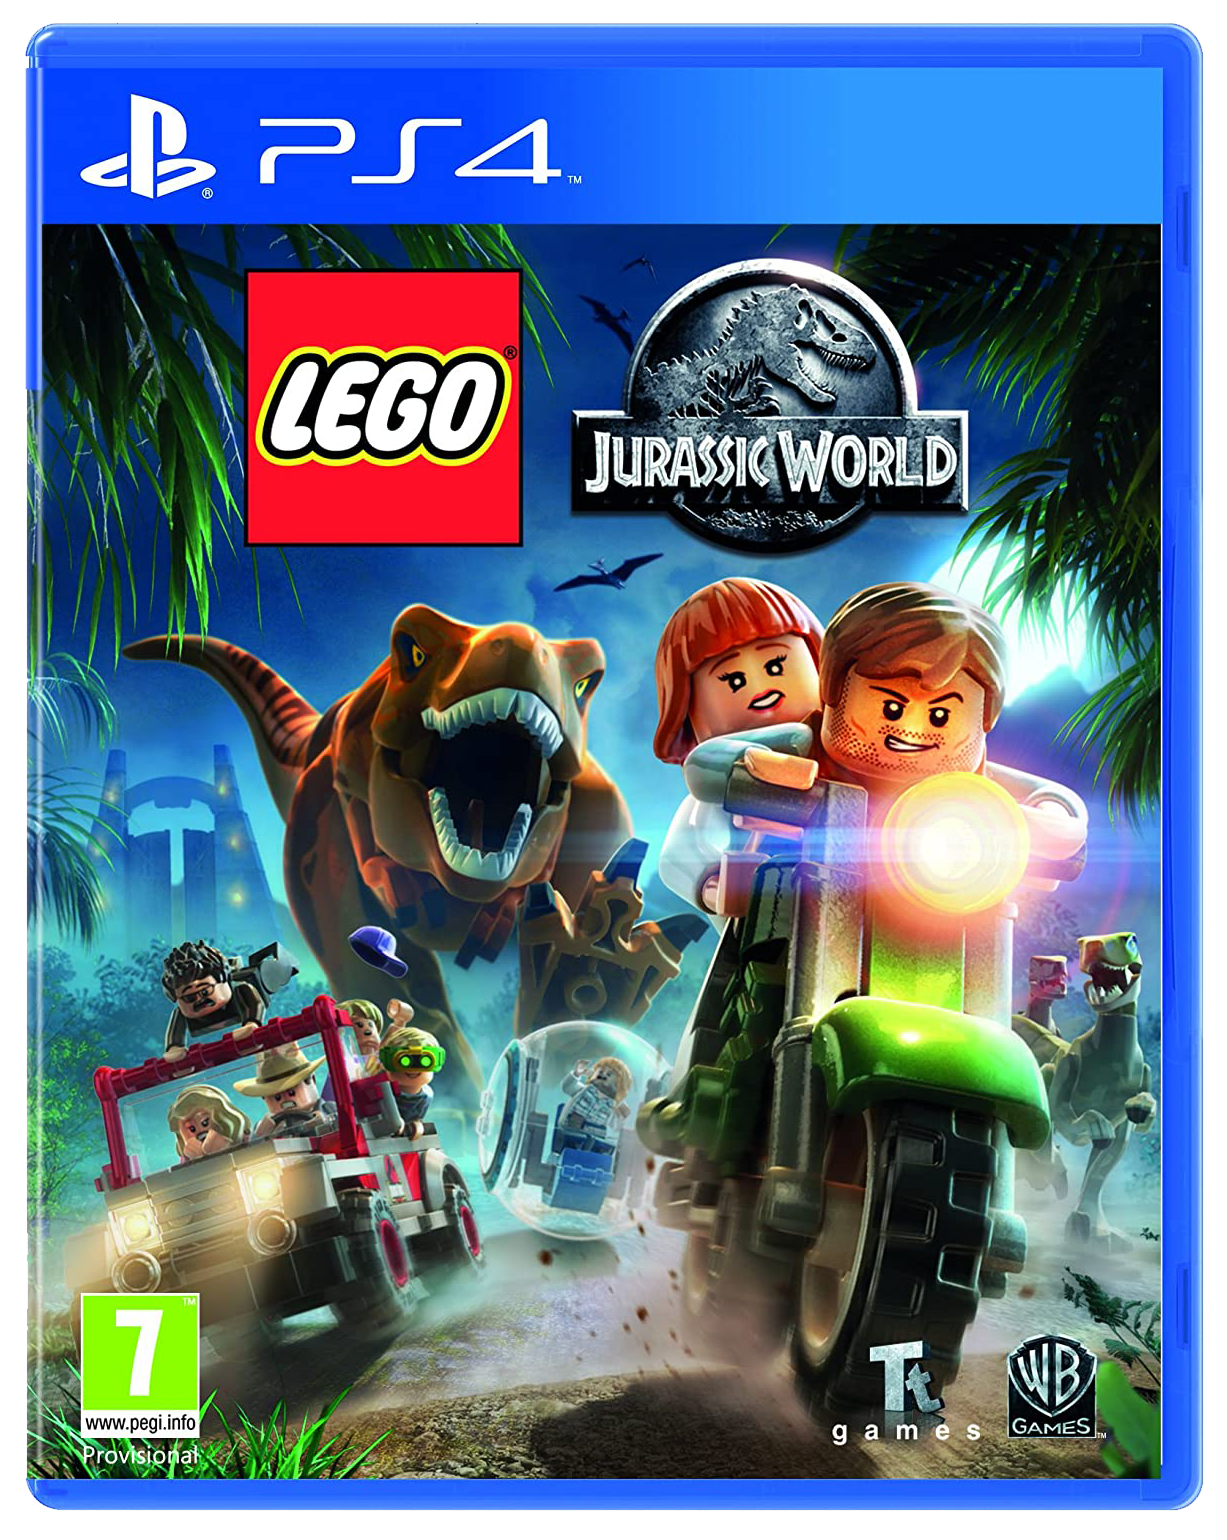 PS4: PS4 mäng LEGO Jurassic World